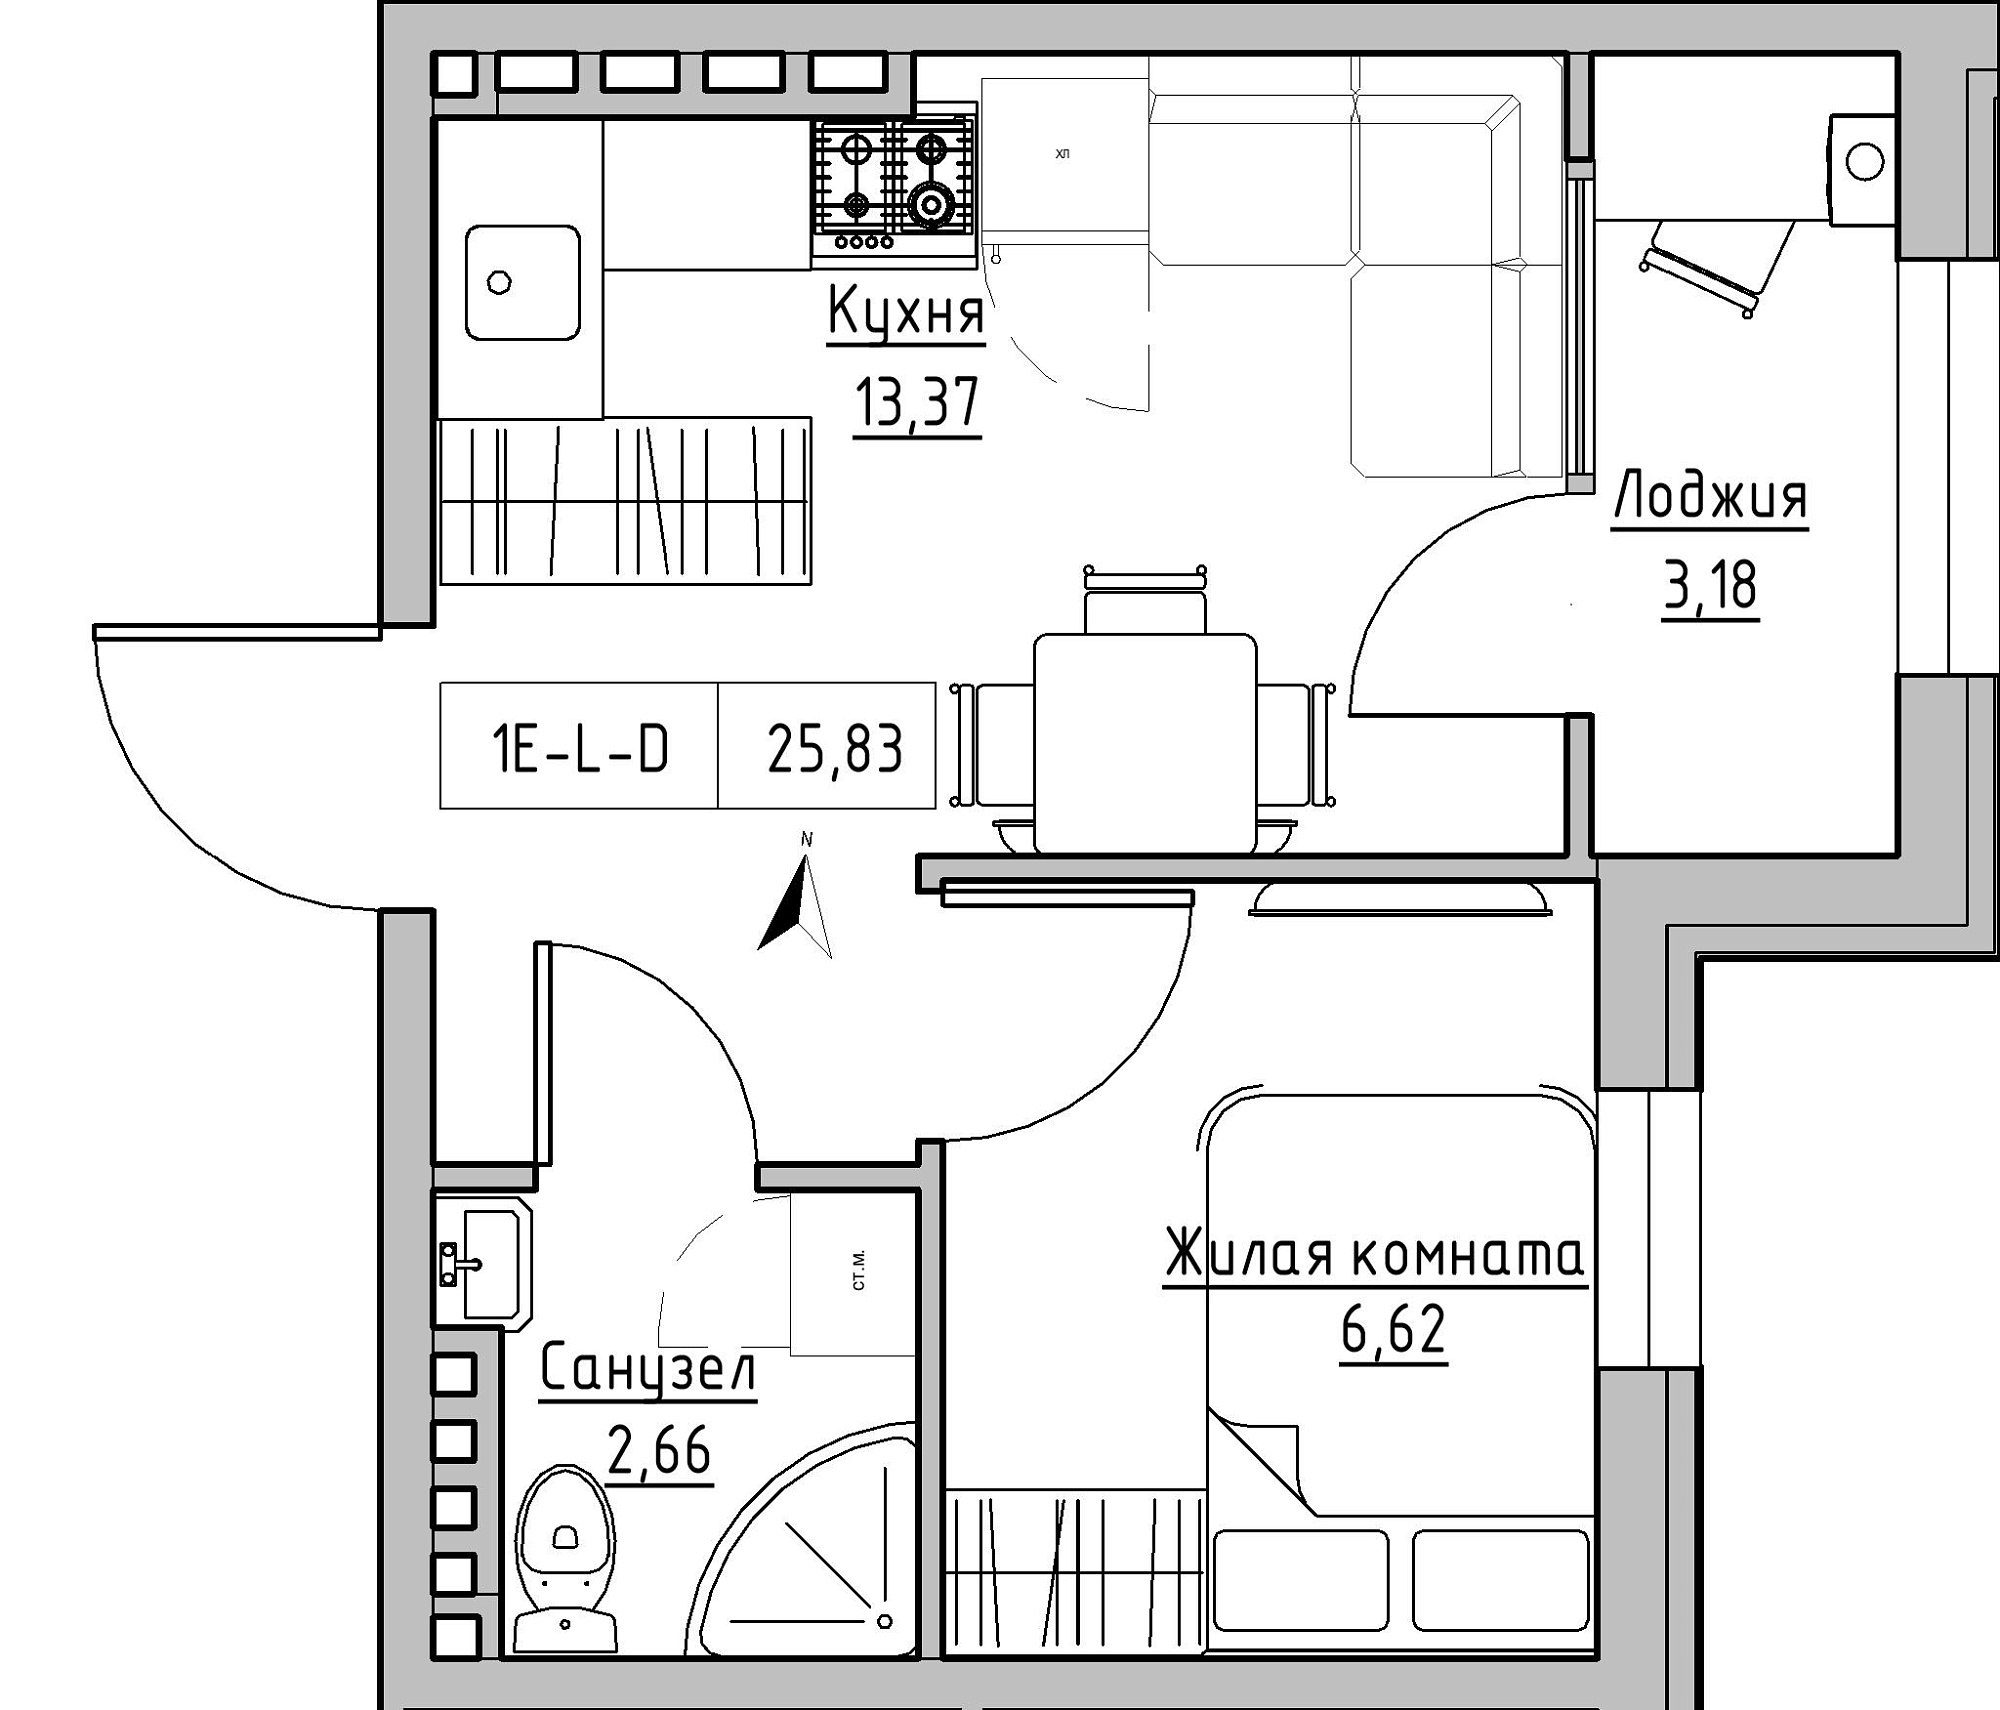 Planning 1-rm flats area 25.83m2, KS-024-04/0017.